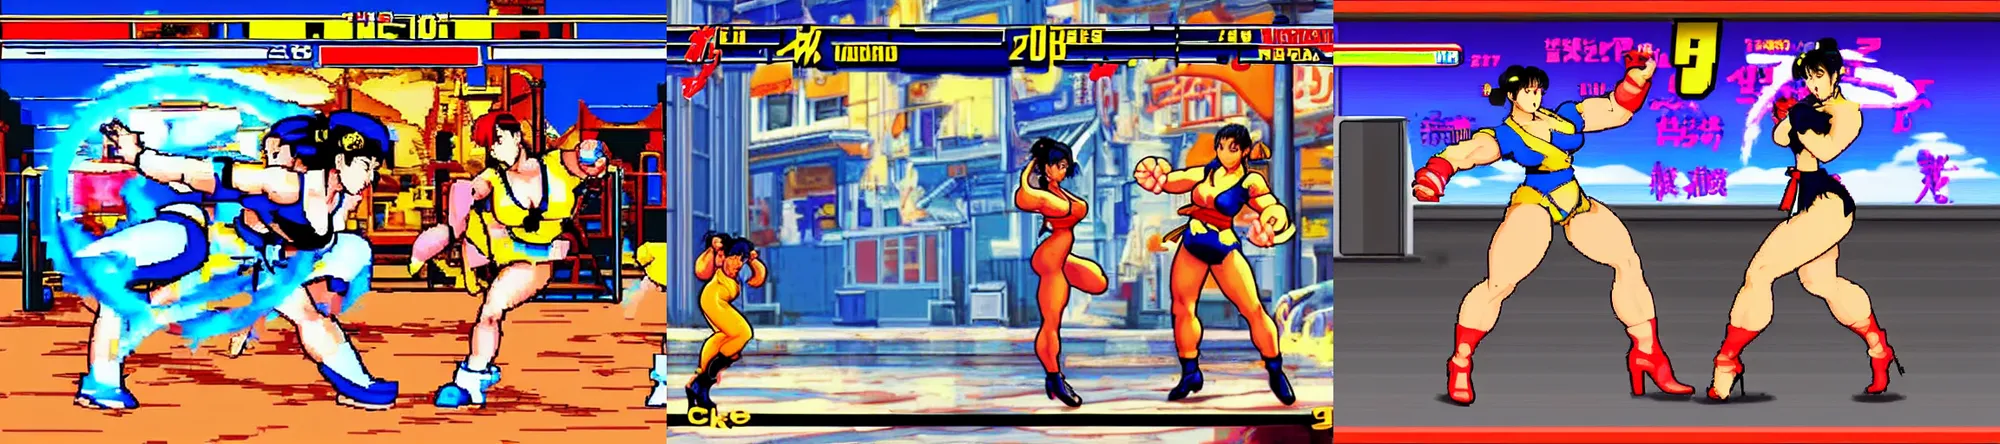 Prompt: chun li vs honda, streetfighter 2 arcade game